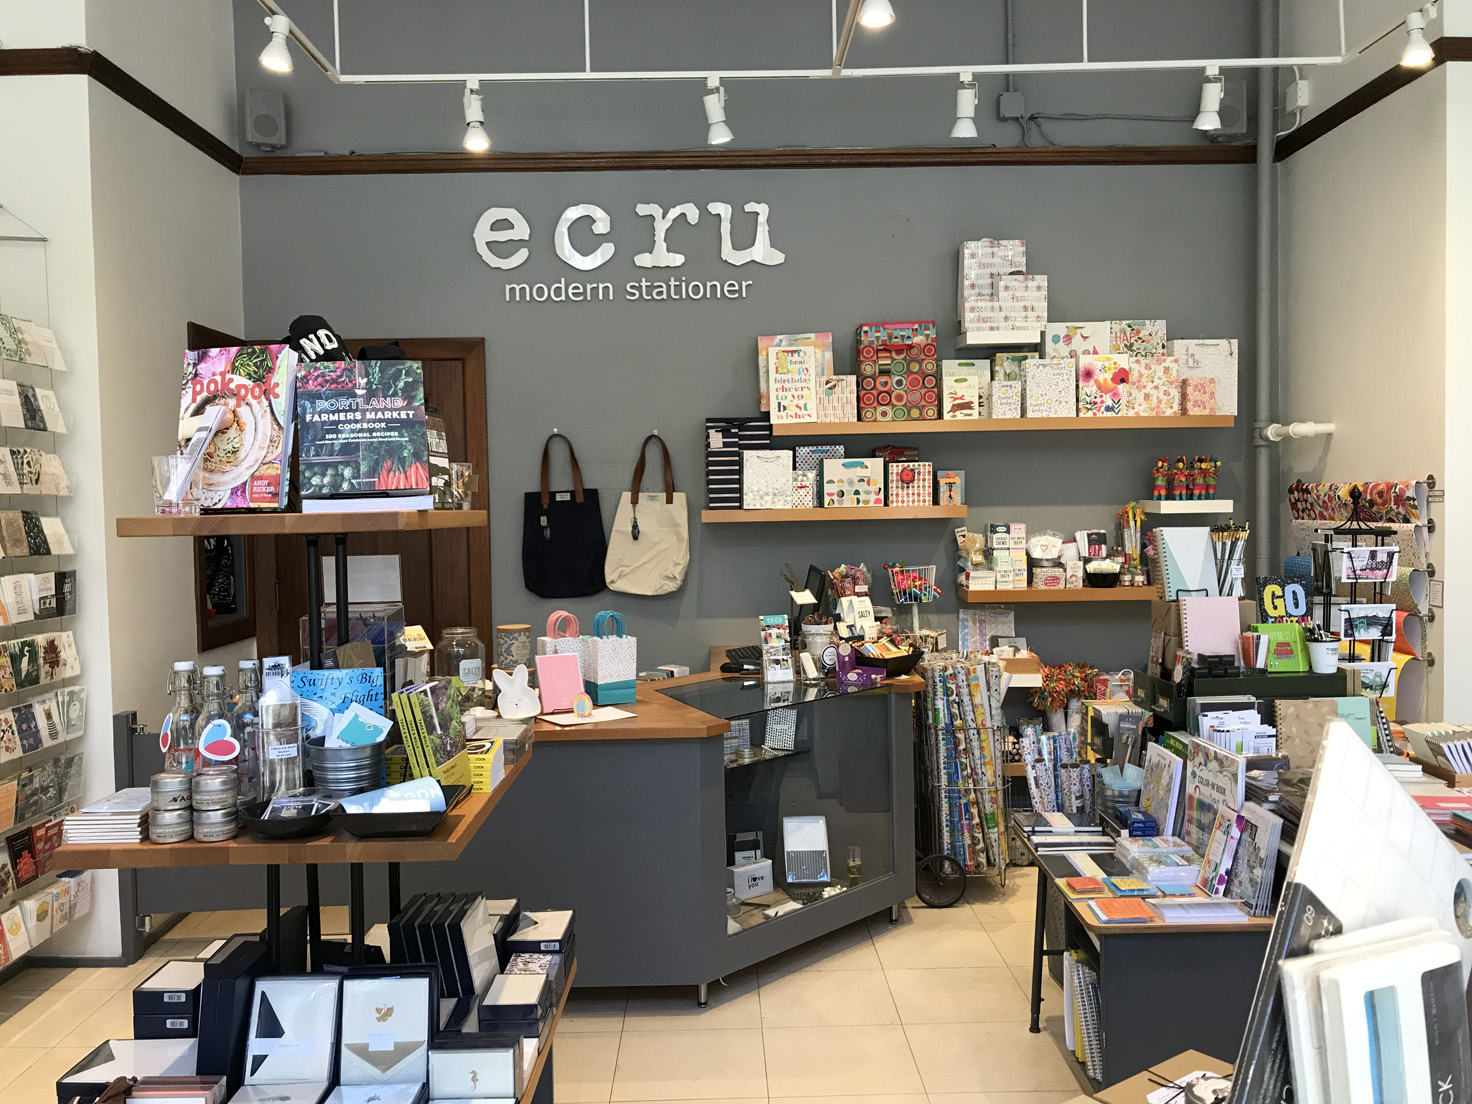 Ecru Modern Stationer: Stationery, cards, paper, & gifts you'll love